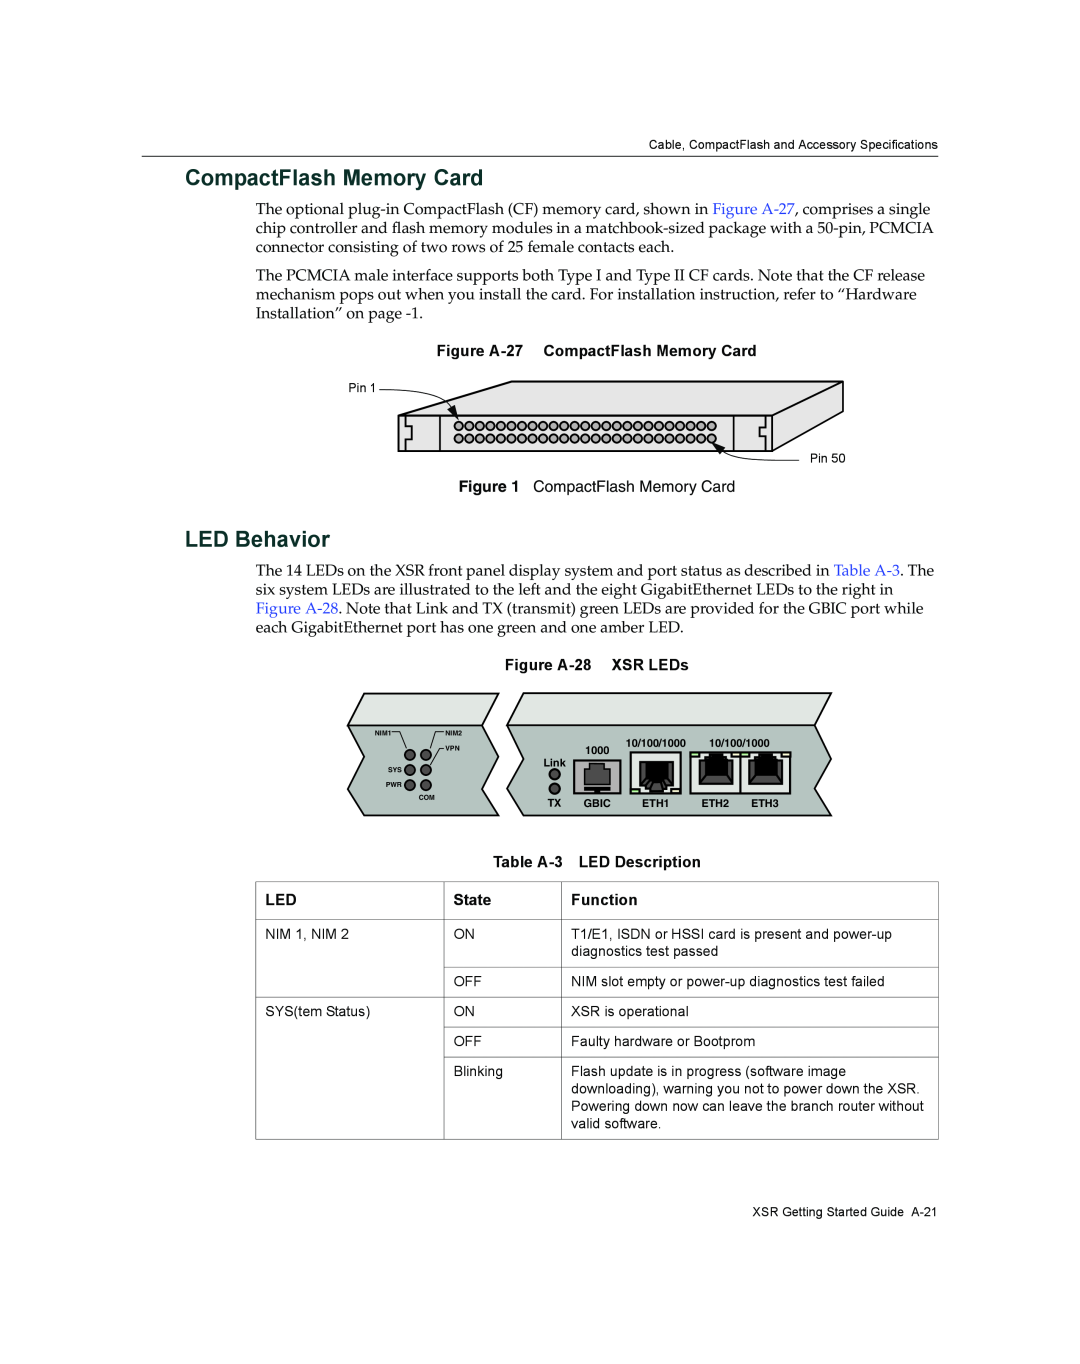 Enterasys Networks XSR-3020 LED Behavior, Figure A-27 CompactFlash Memory Card, Figure A-28 XSR LEDs, State, Function 